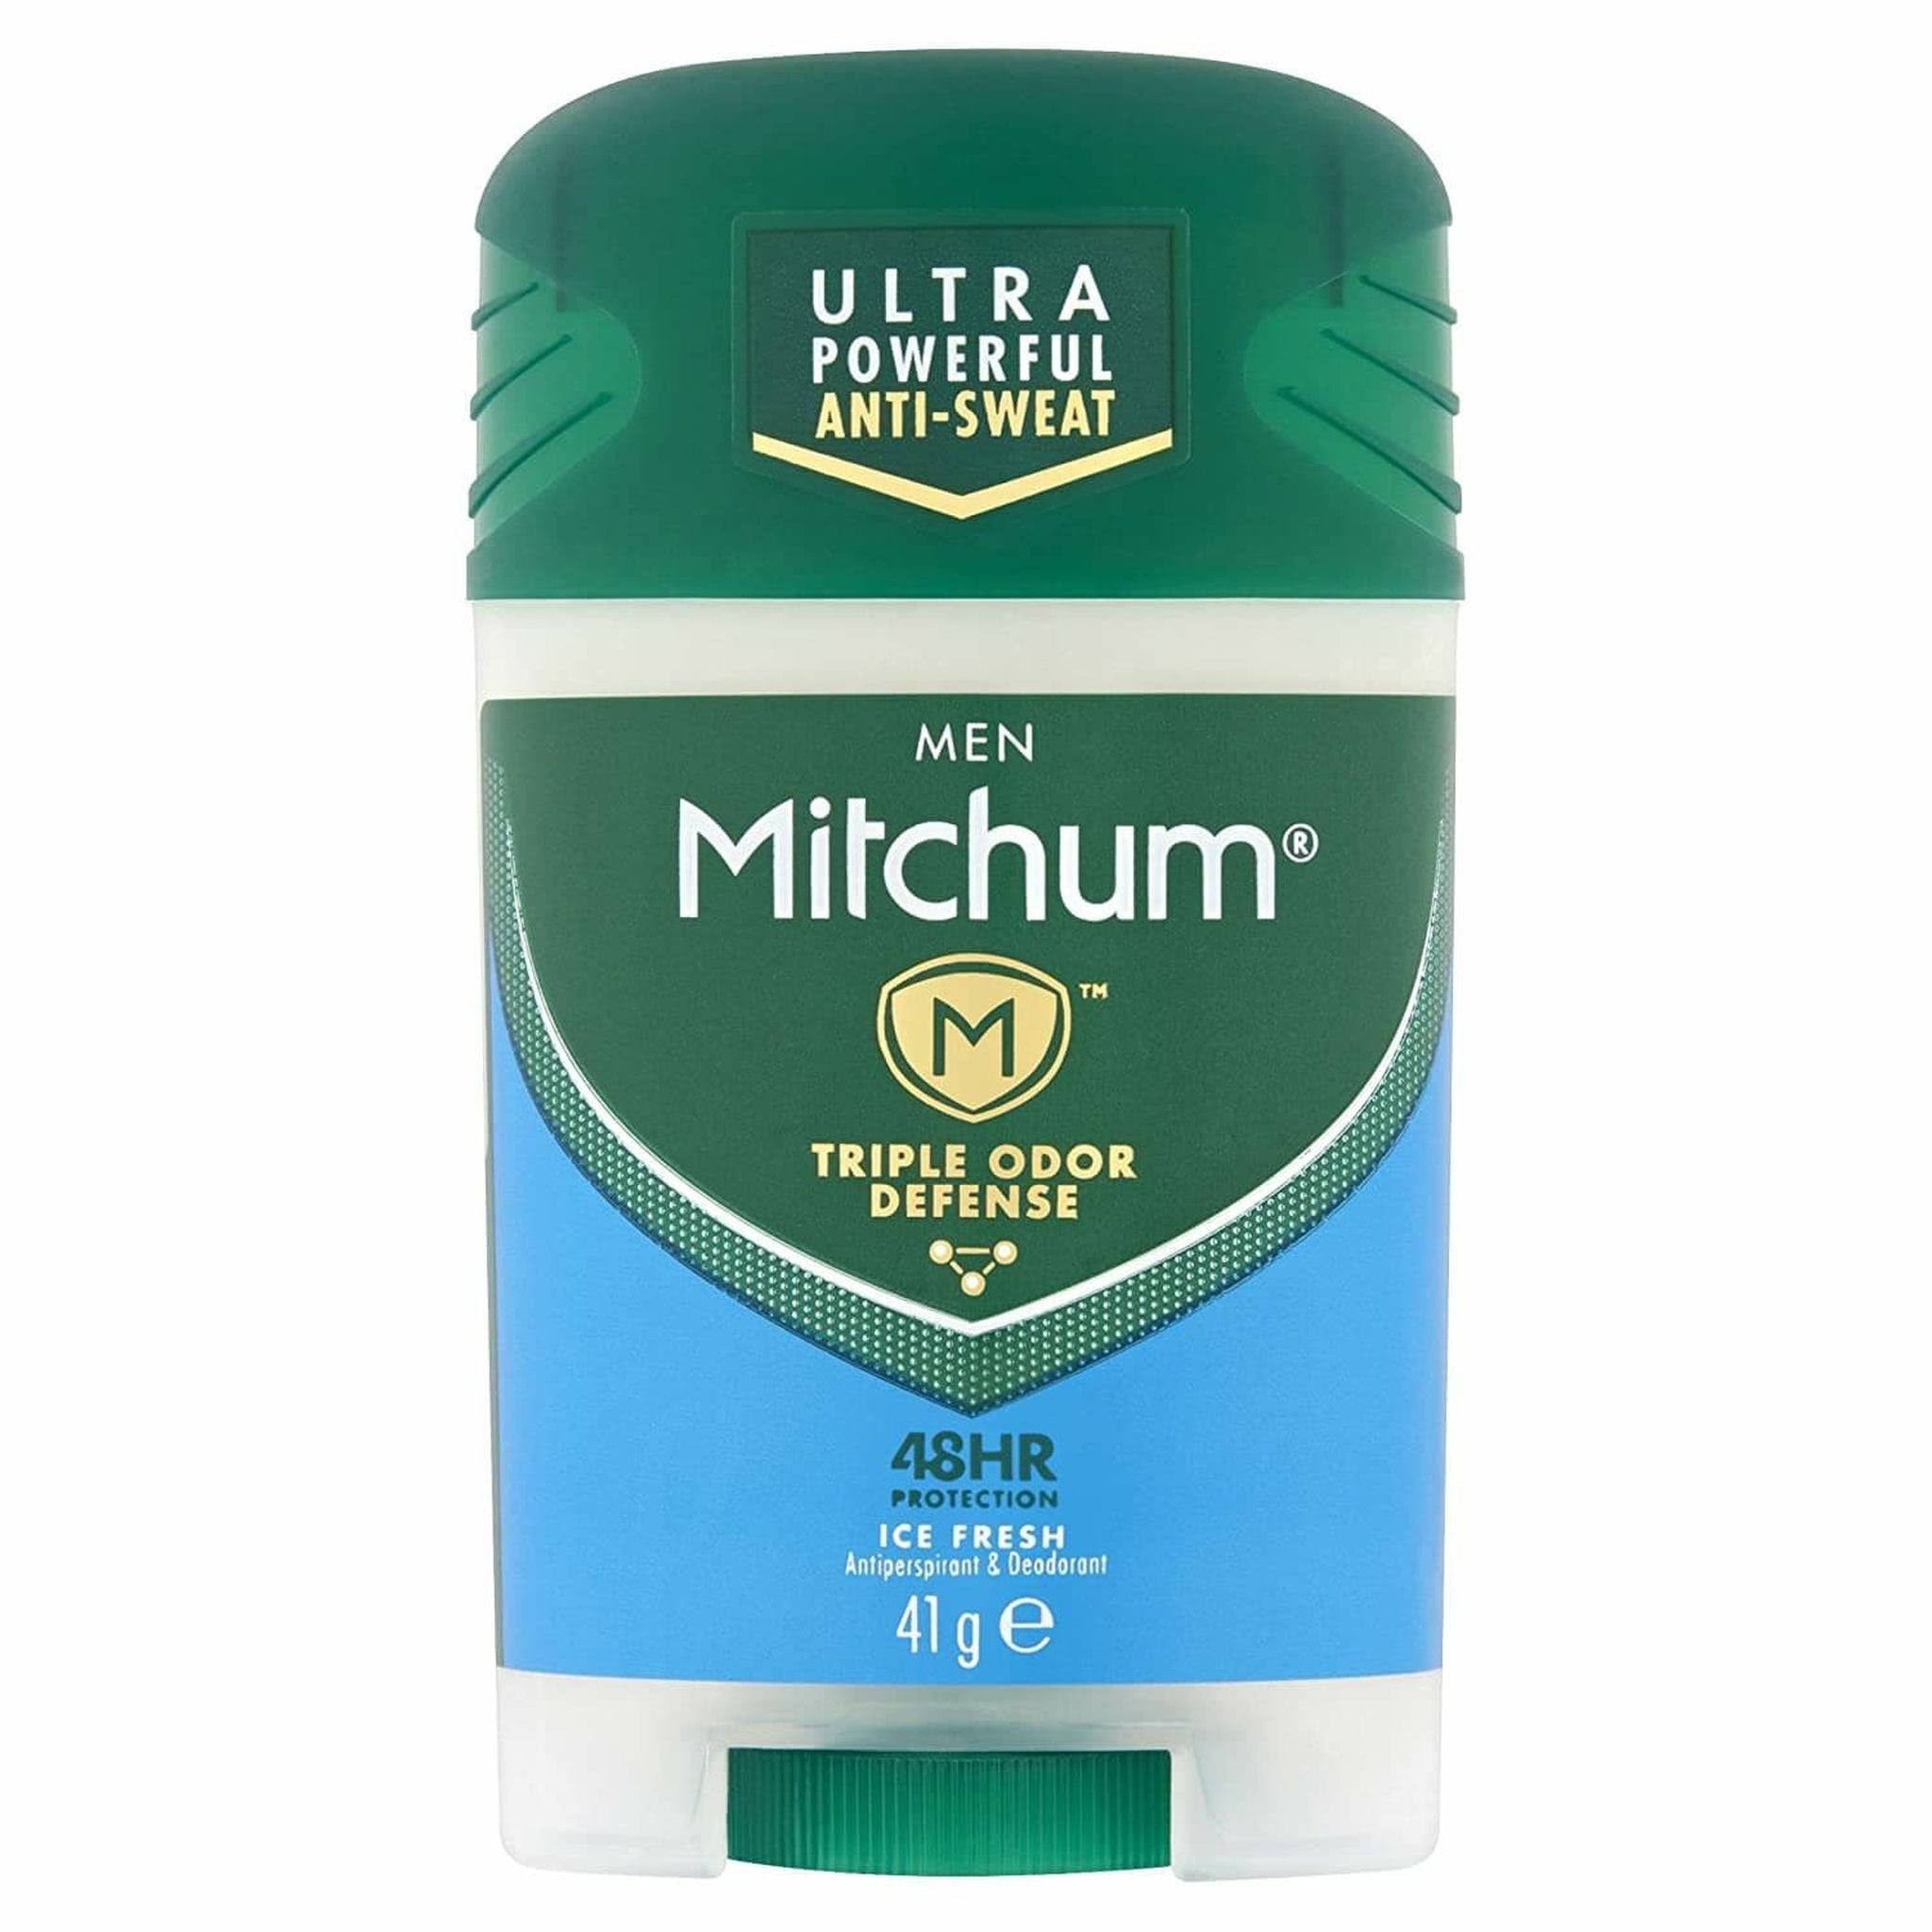 Mitchum Men's Ice Fresh Anti Perspirant Deodorant Stick - 41g